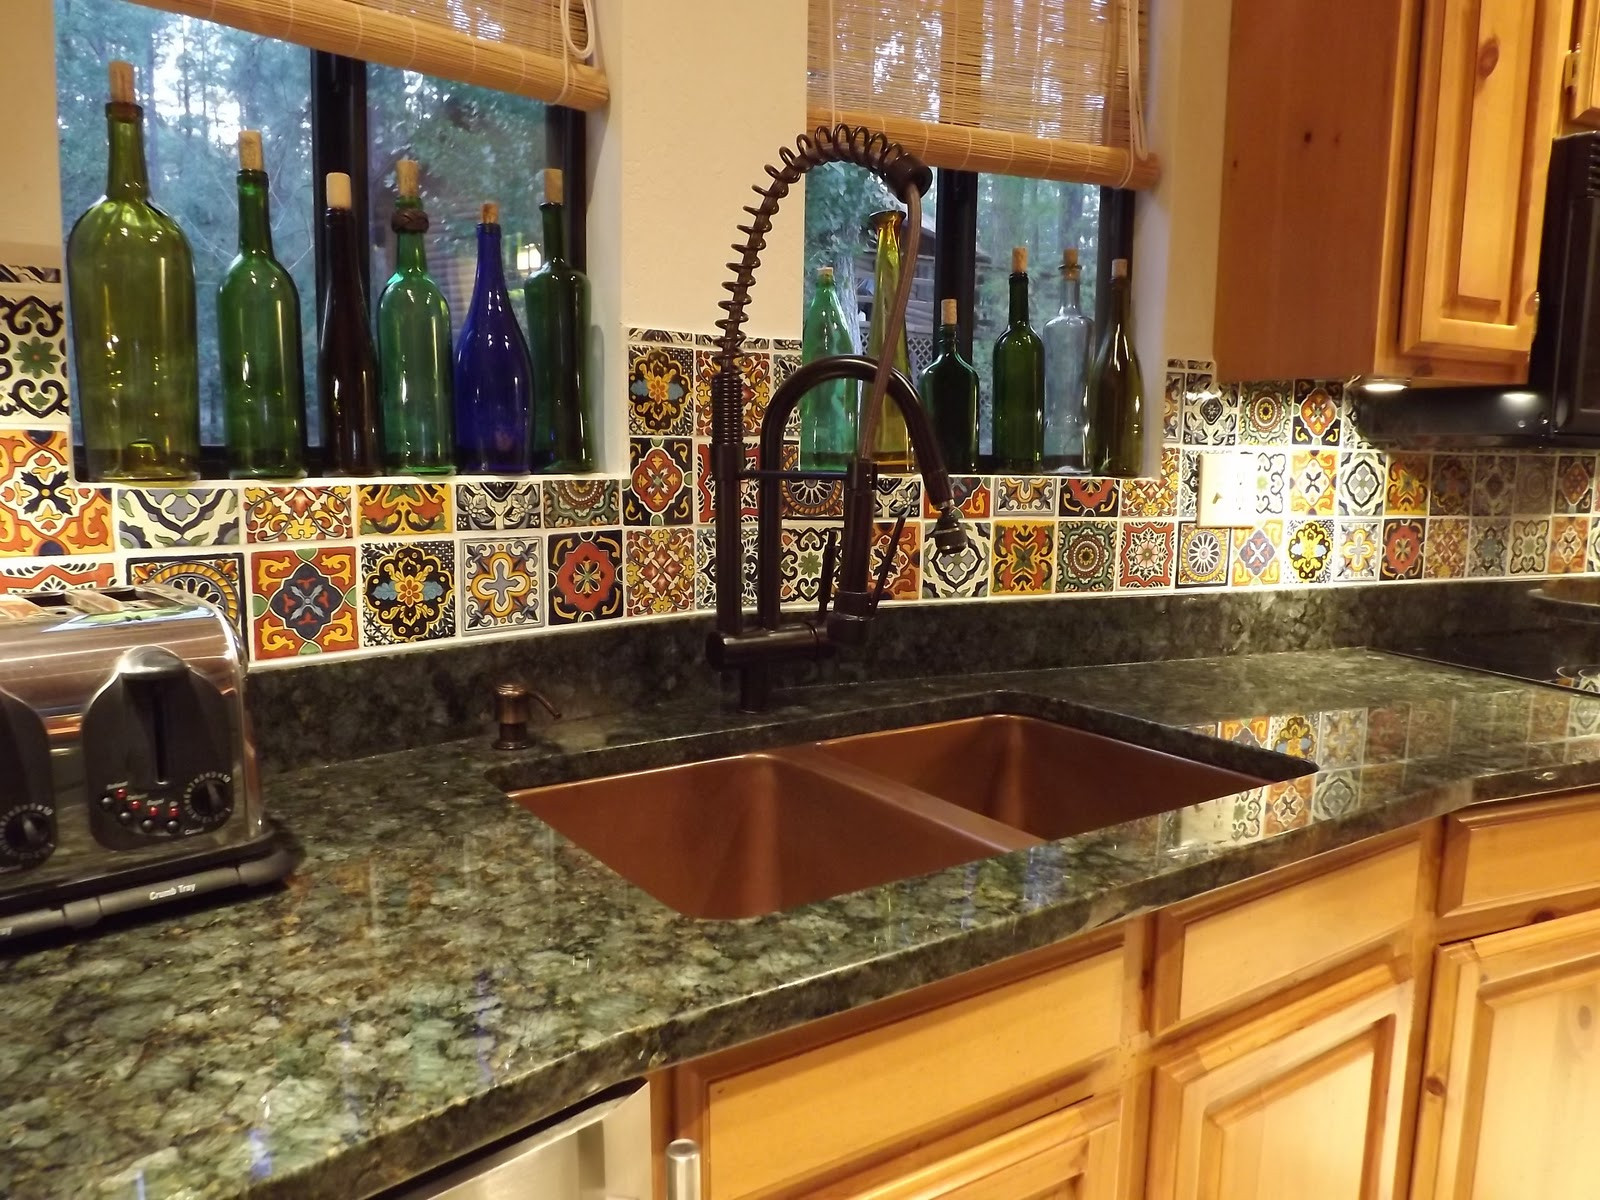 Mexican Tile Backsplash Kitchen
 Dusty Coyote Mexican Tile Kitchen Backsplash DIY